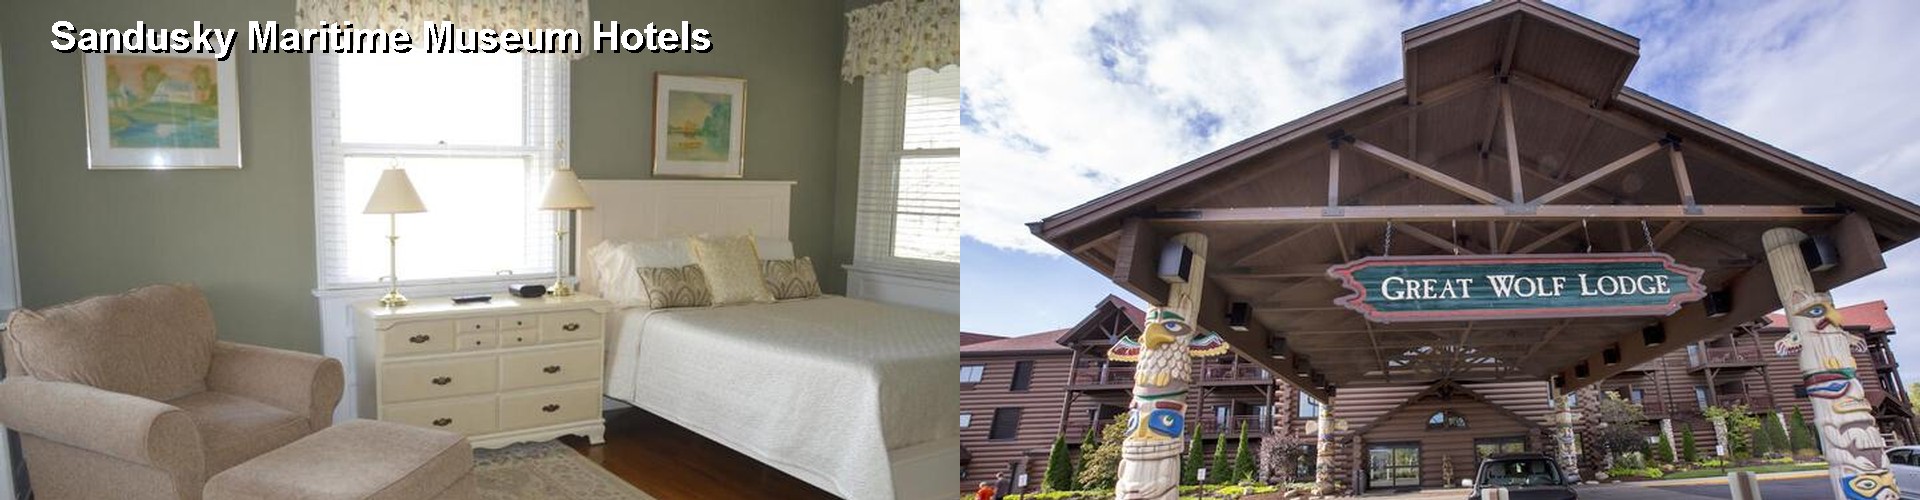 4 Best Hotels near Sandusky Maritime Museum